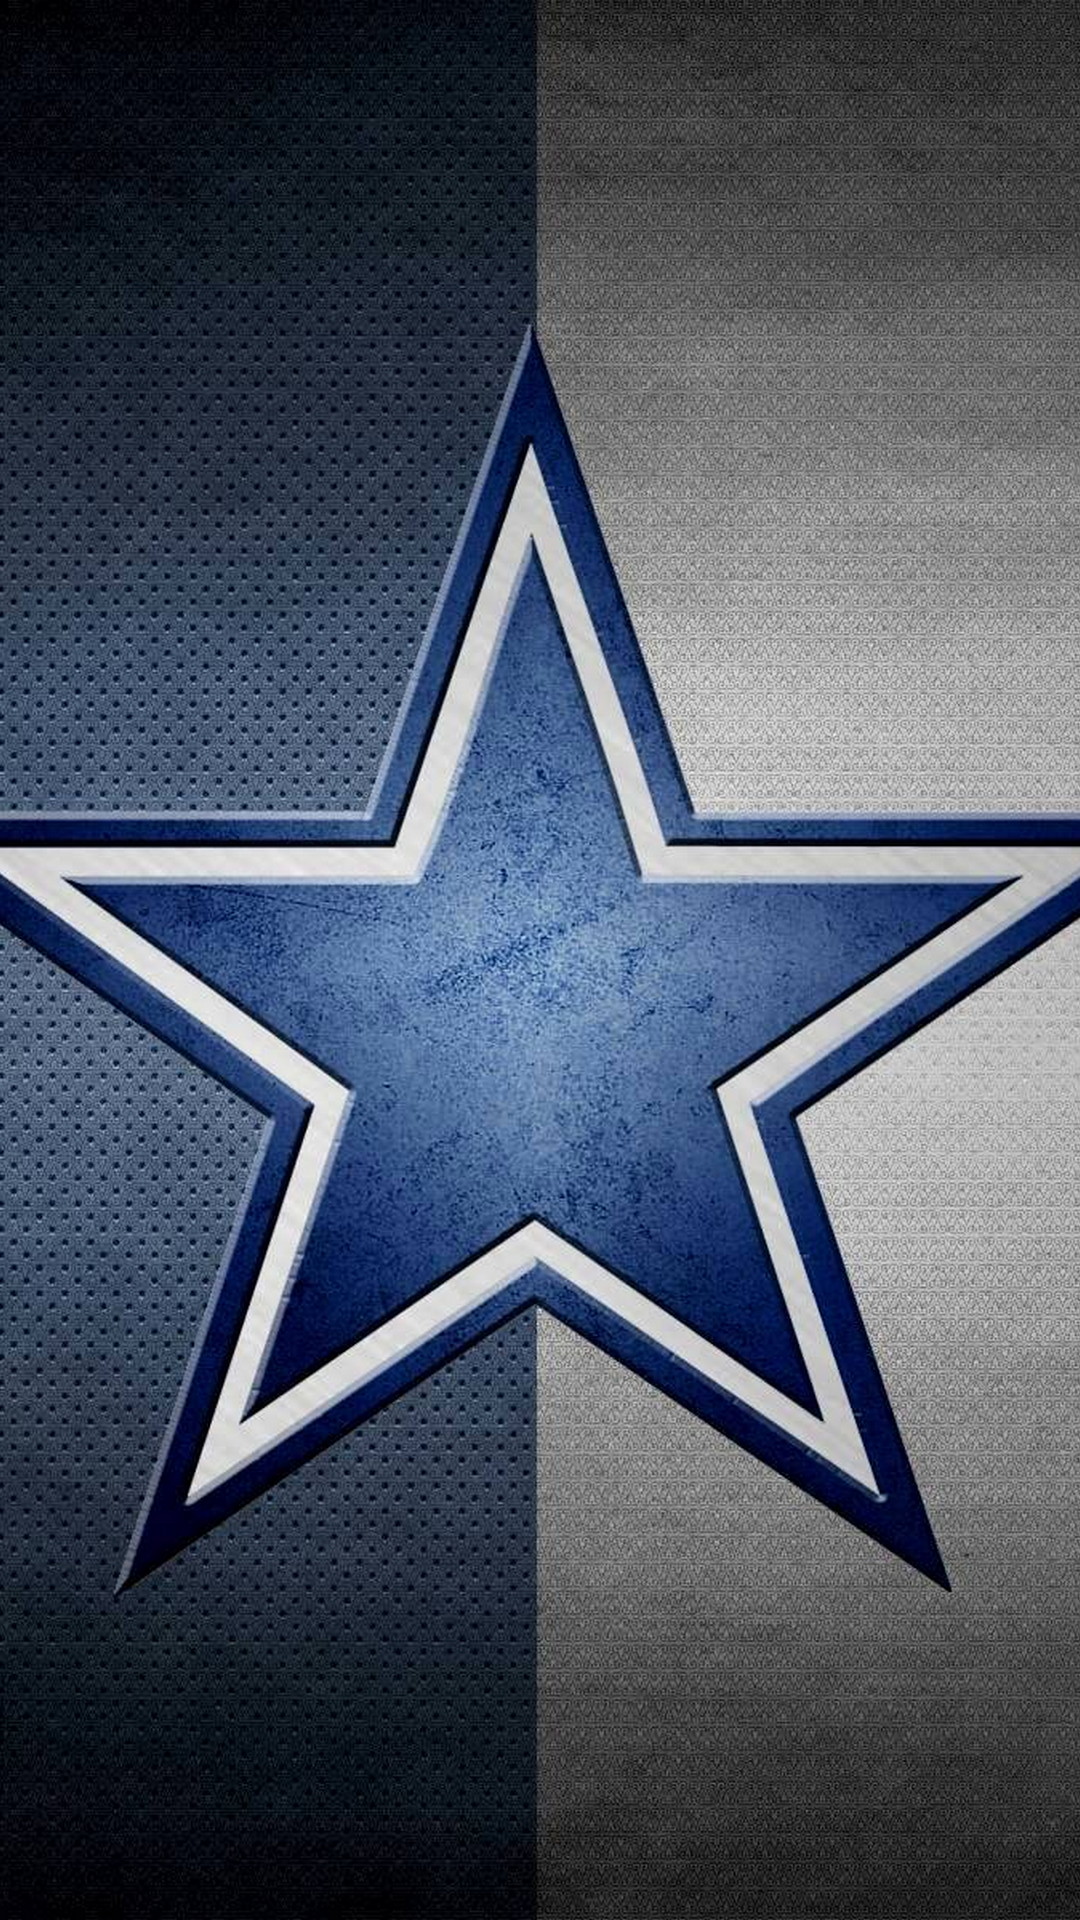 Dallas Cowboys on Twitter EarnTheStar  WallpaperWednesday  httpstcoXoeMginYSl  Twitter